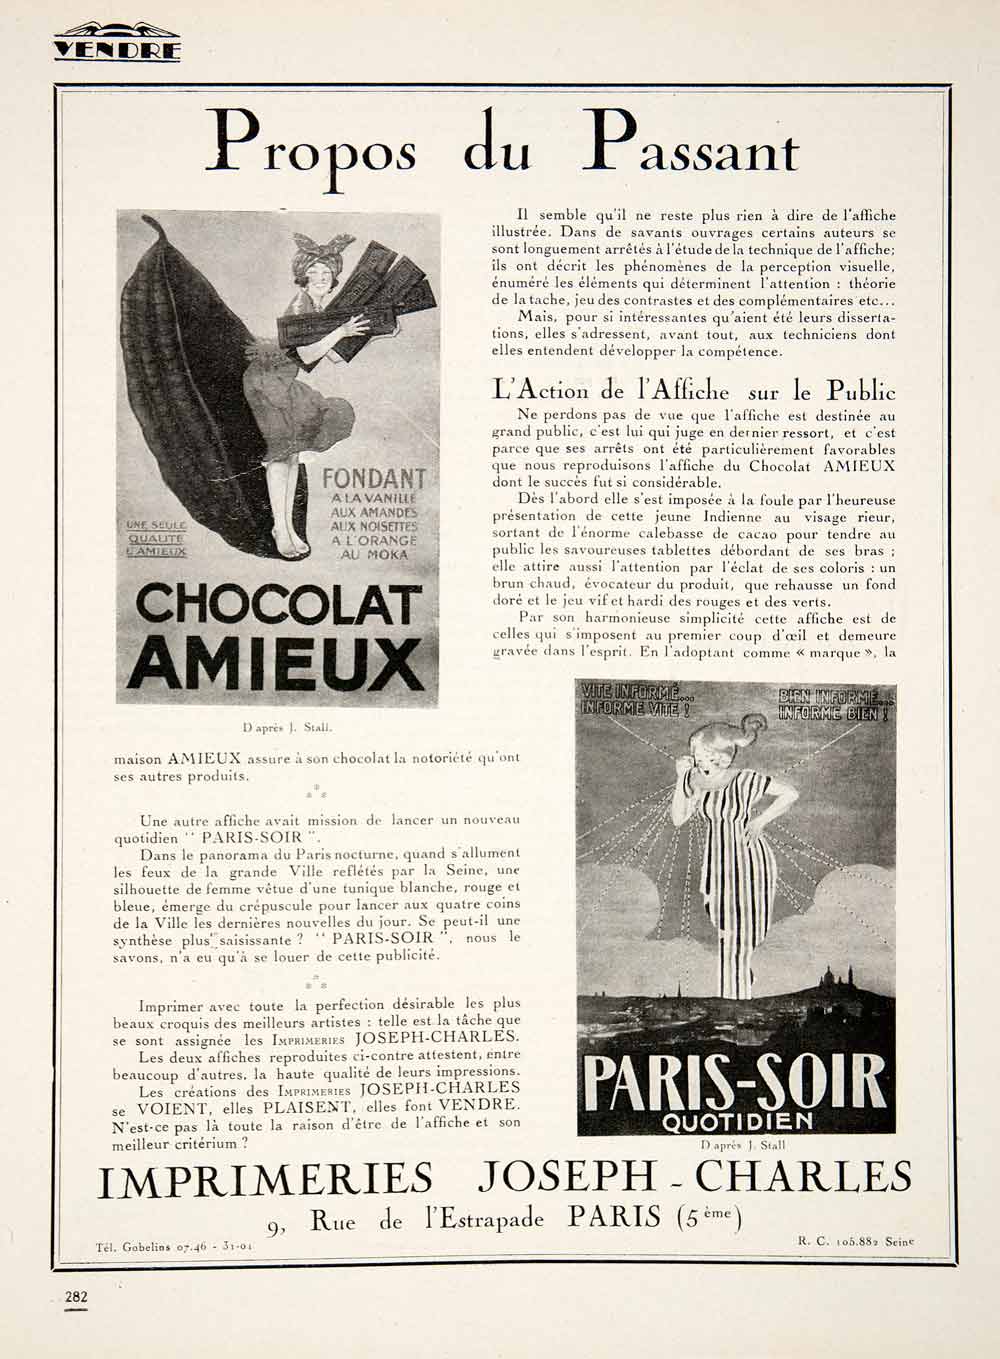 1924 Ad Amieux Chocolat French Paris-Soir Joseph-Charles Printing Firm VEN3